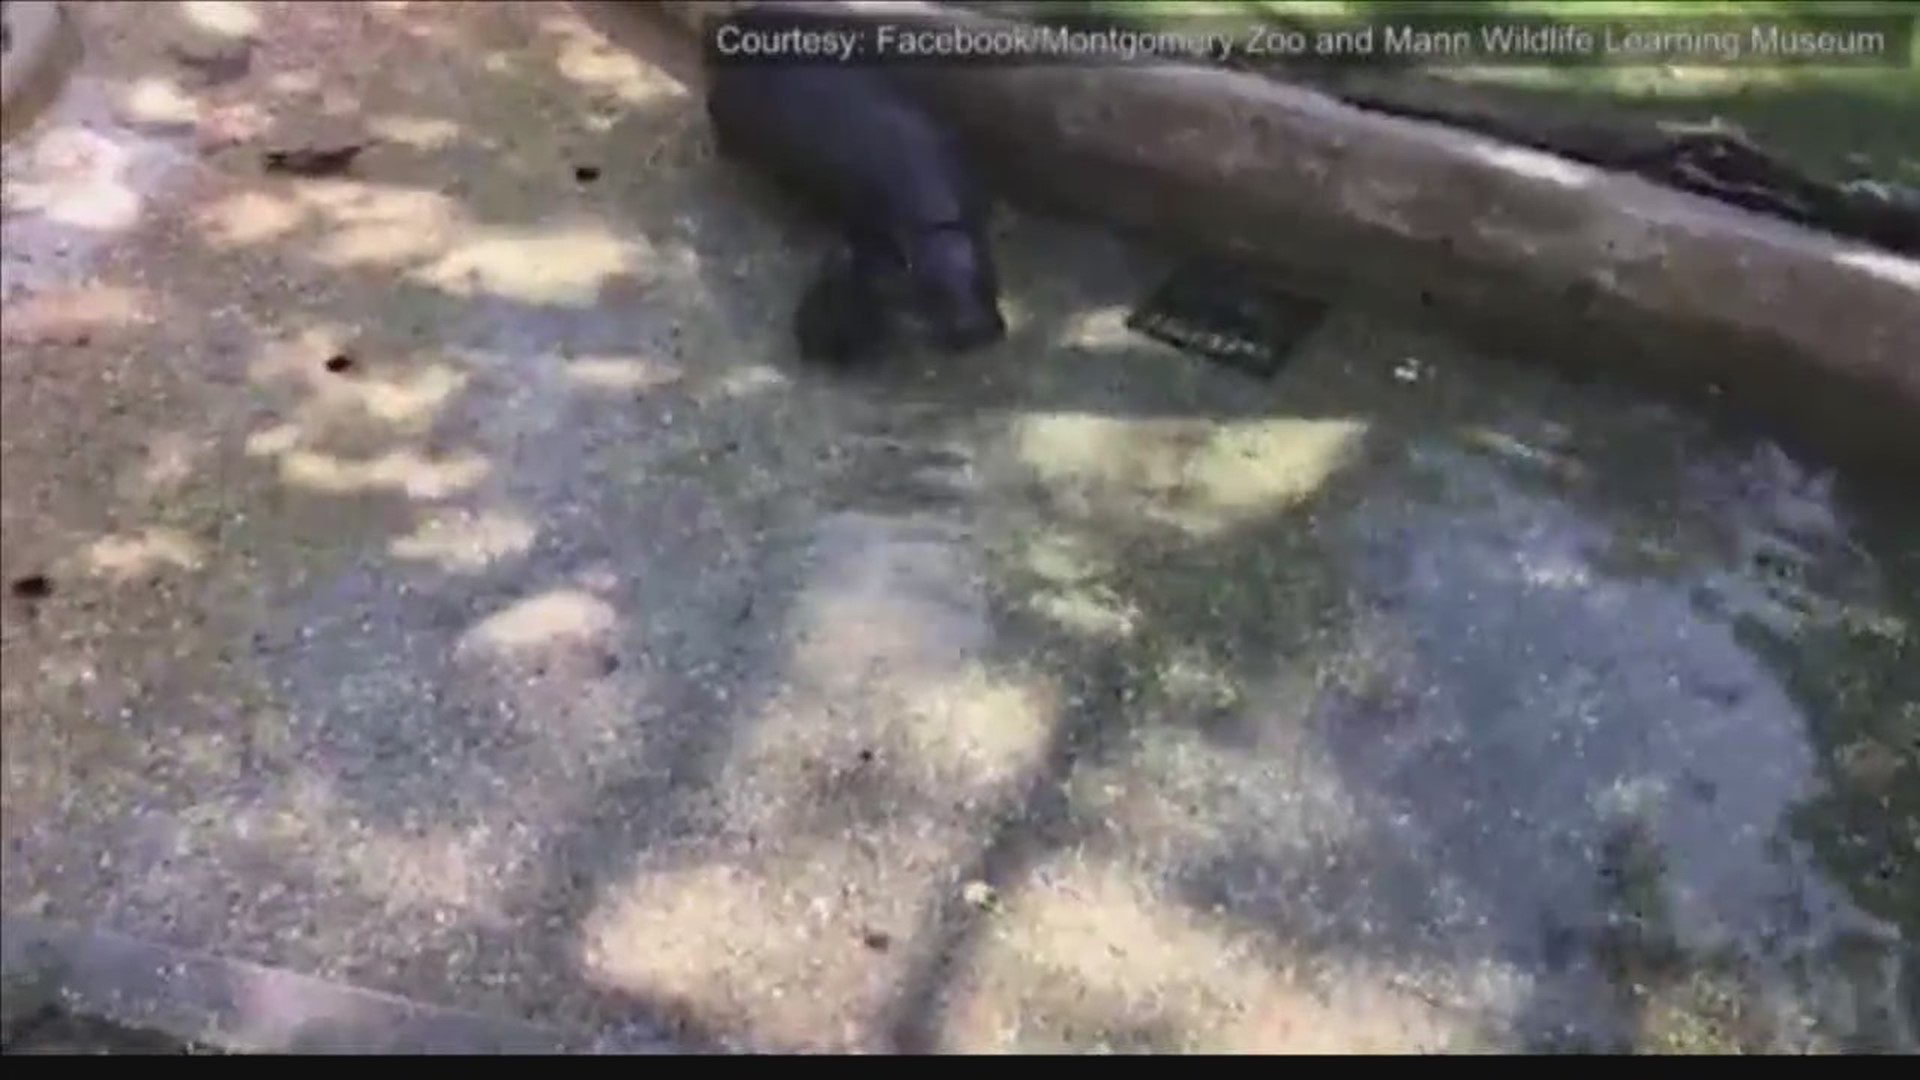 A pygmy hippopotamus has been born at the Montgomery Zoo.